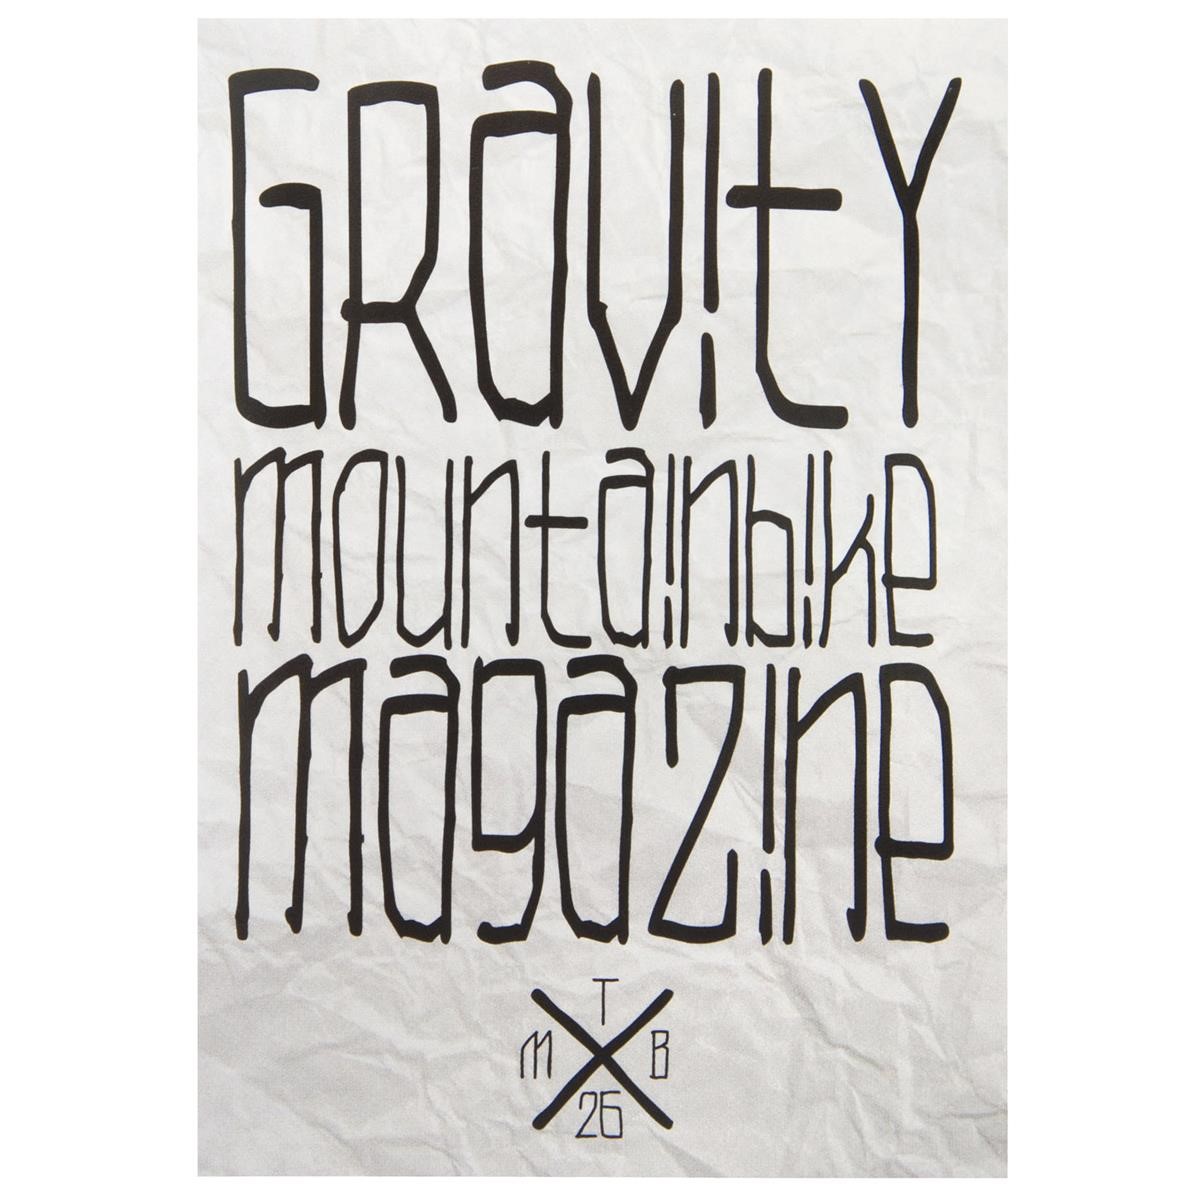 Gravity Mountainbike Magazine Sticker  MTB 26, 10.4 cm